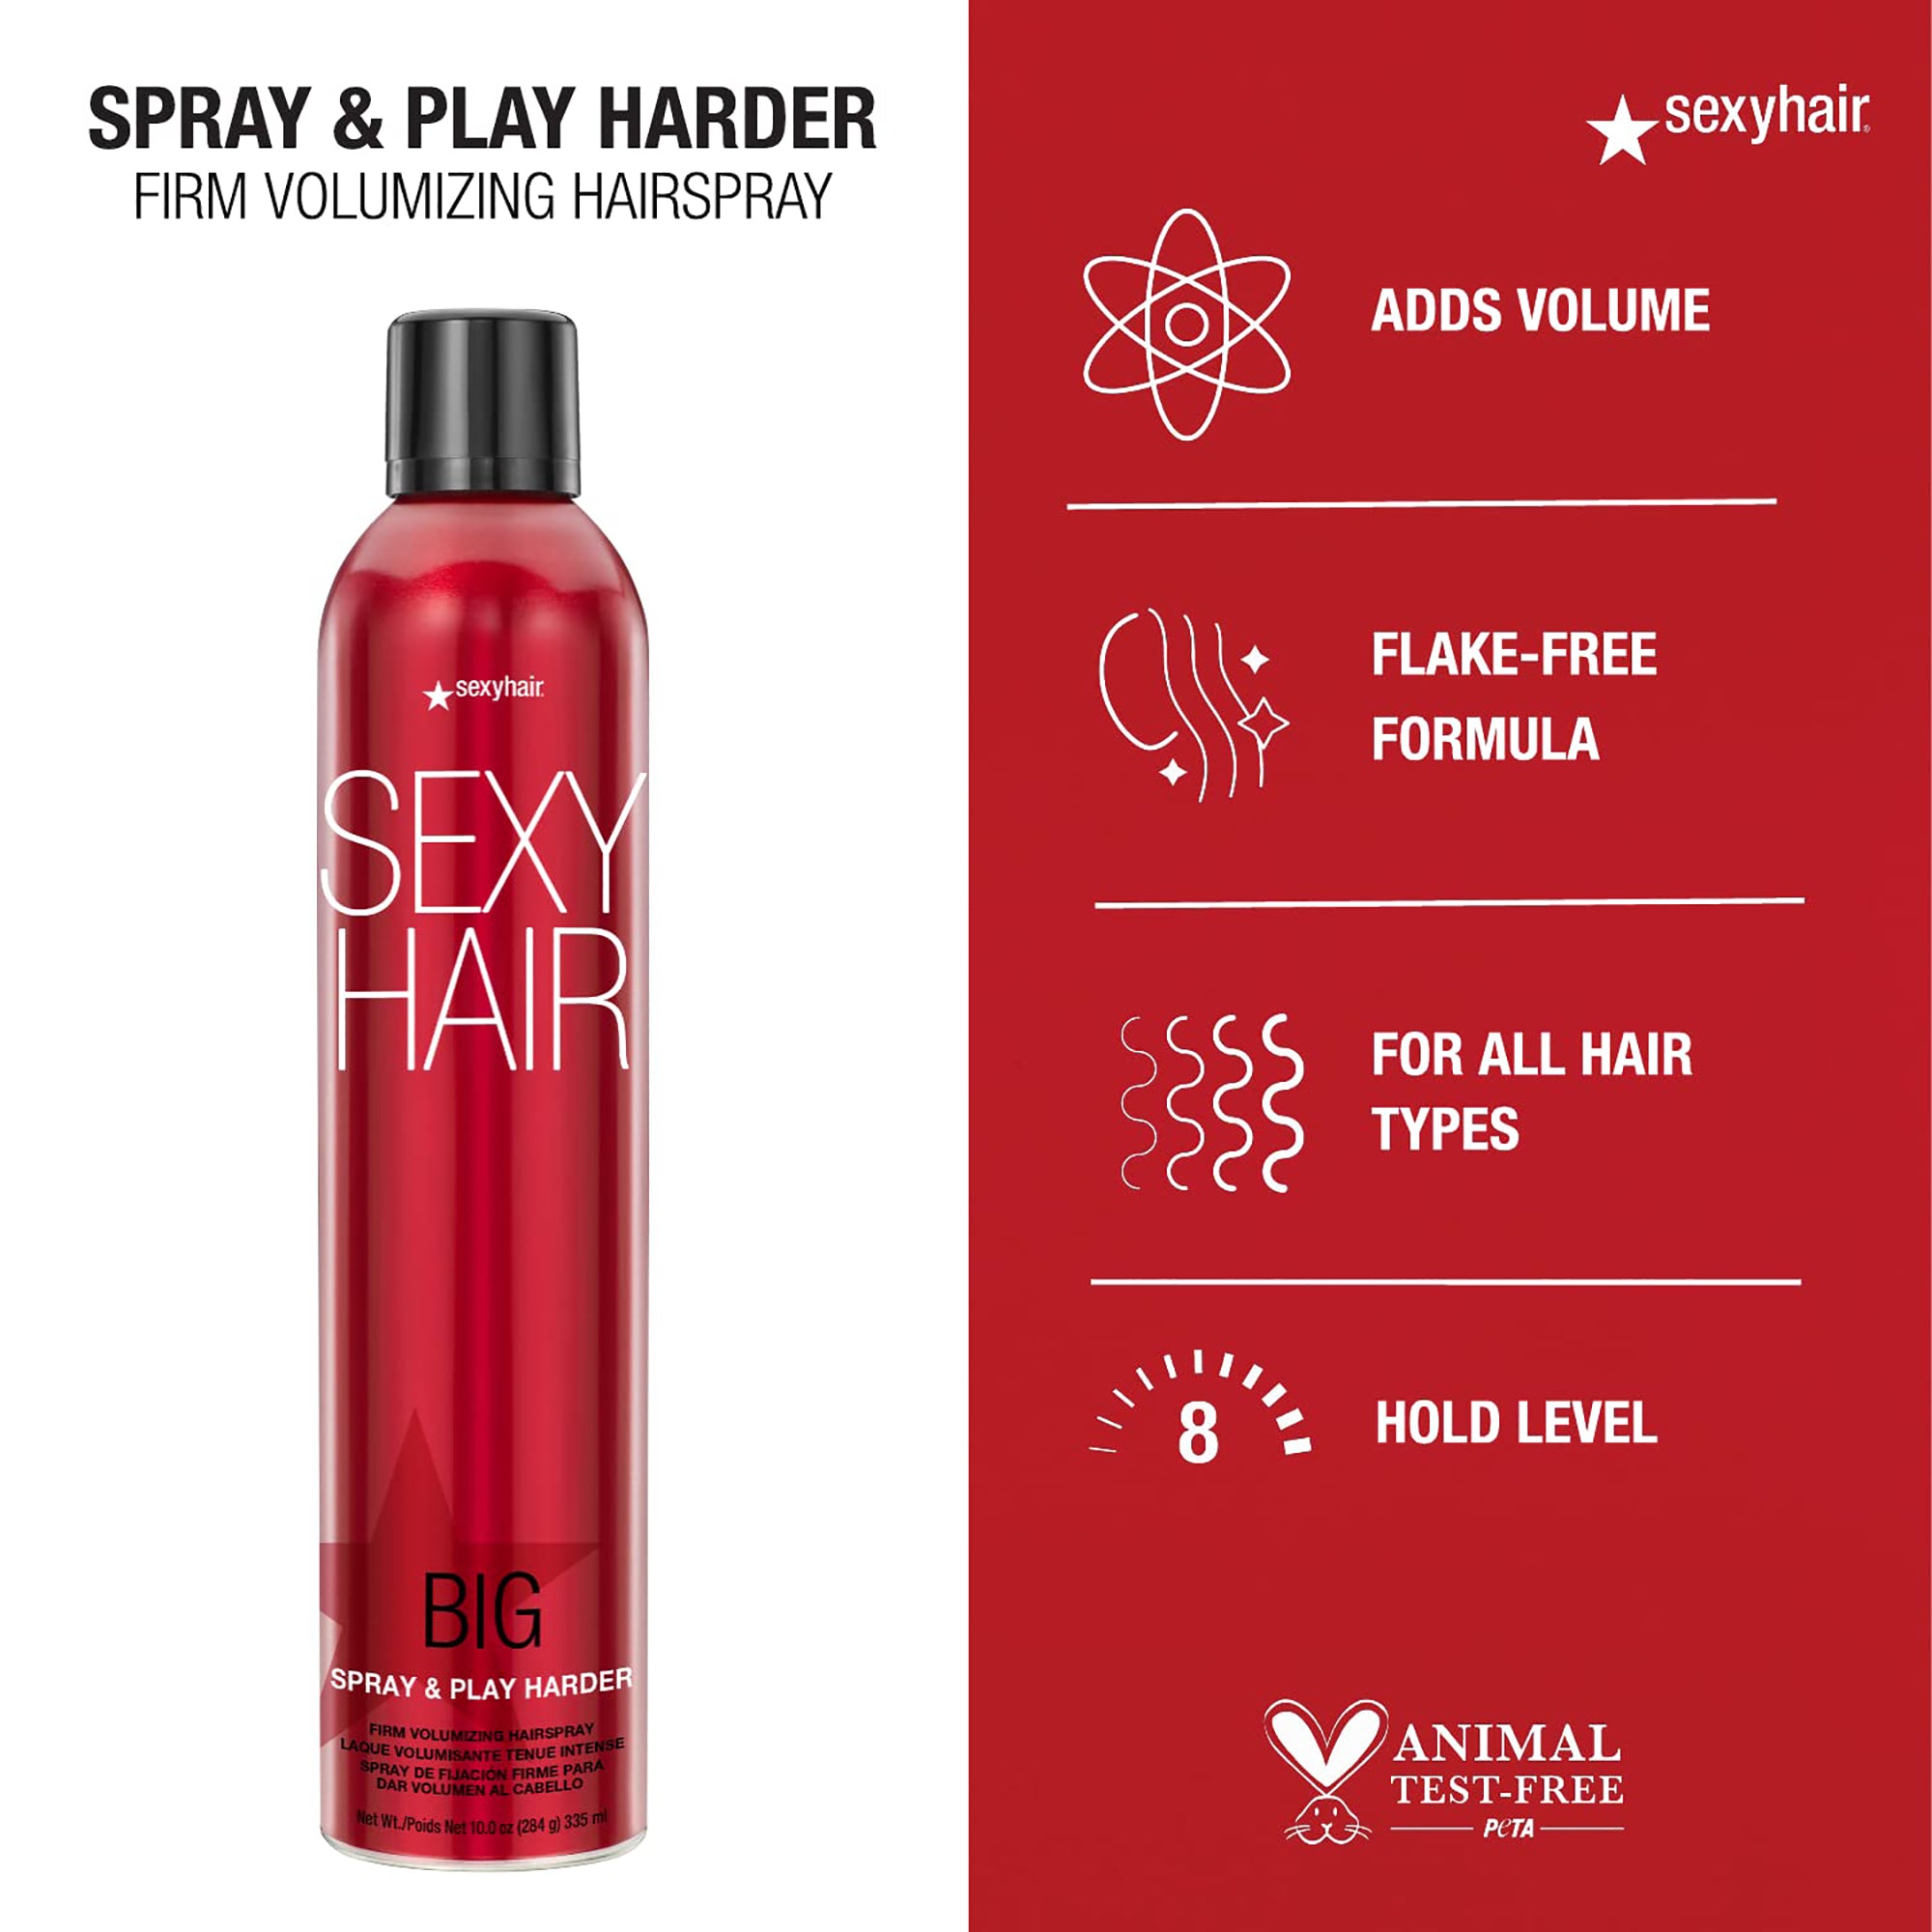 Sexy Hair Big SexyHair Spray & Play Harder Firm Volumizing Hairspray / 10